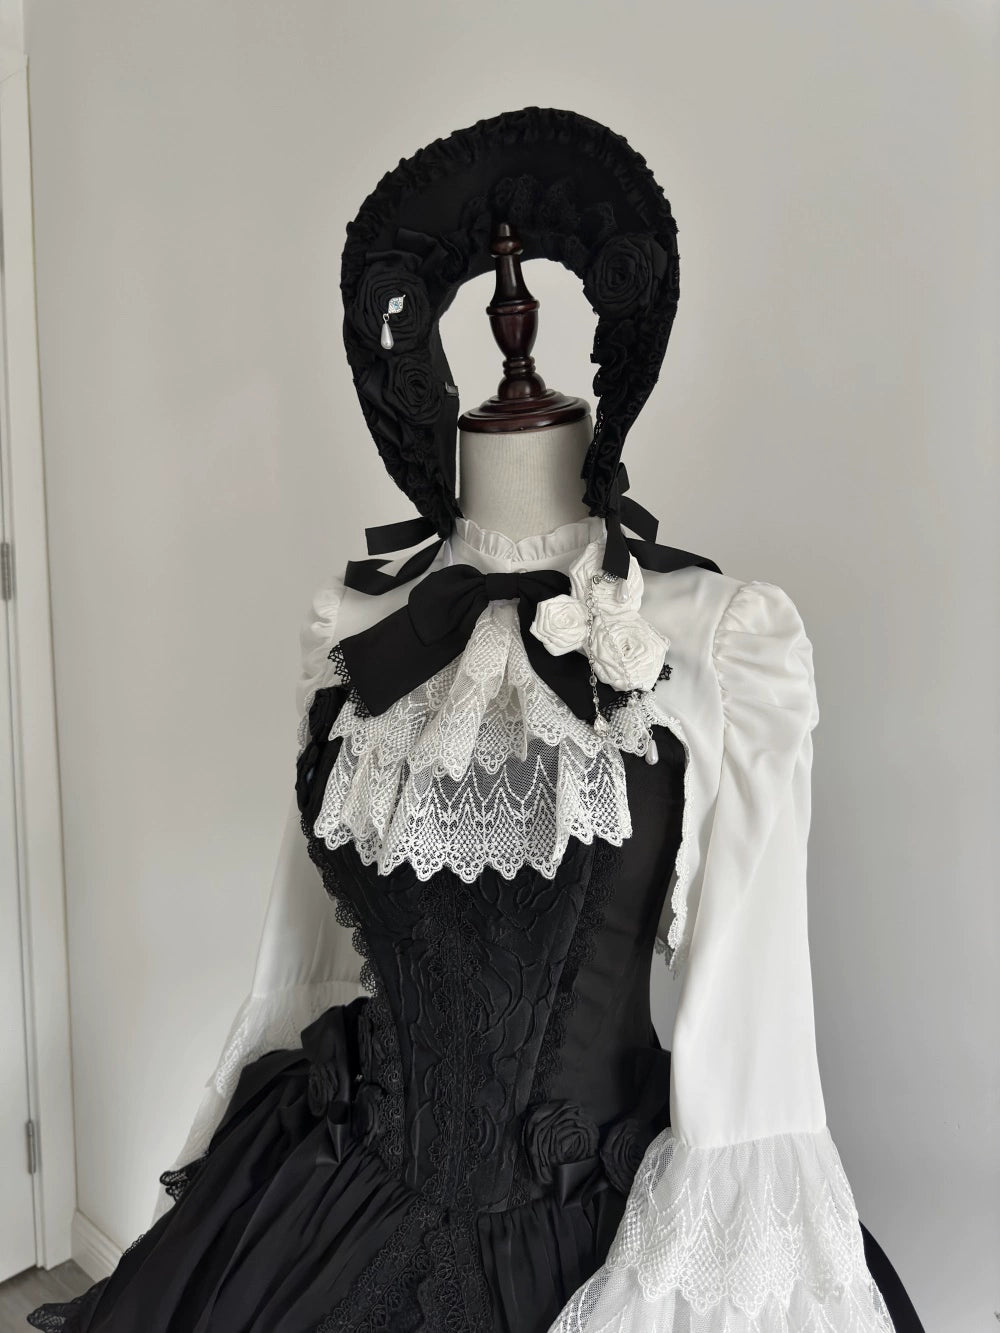 (BFM)LeMiroir~Saint~Gothic Lolita Bonnet Rib Chain Brooch Jabot   